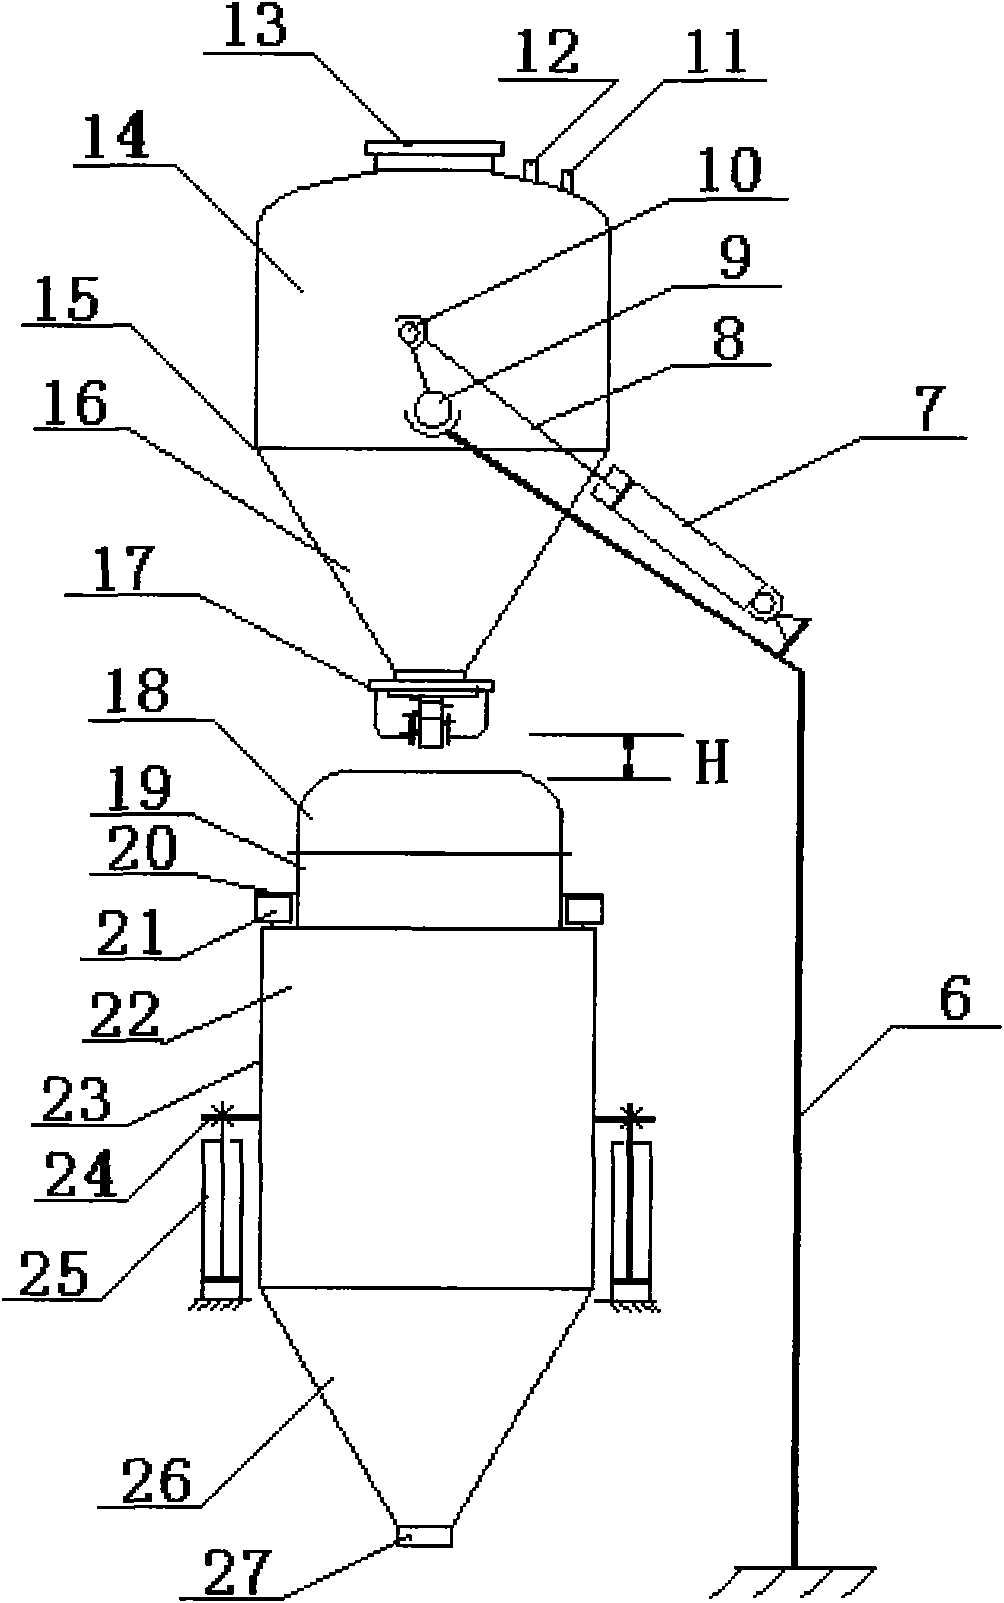 Turntable type quantitative discharging device